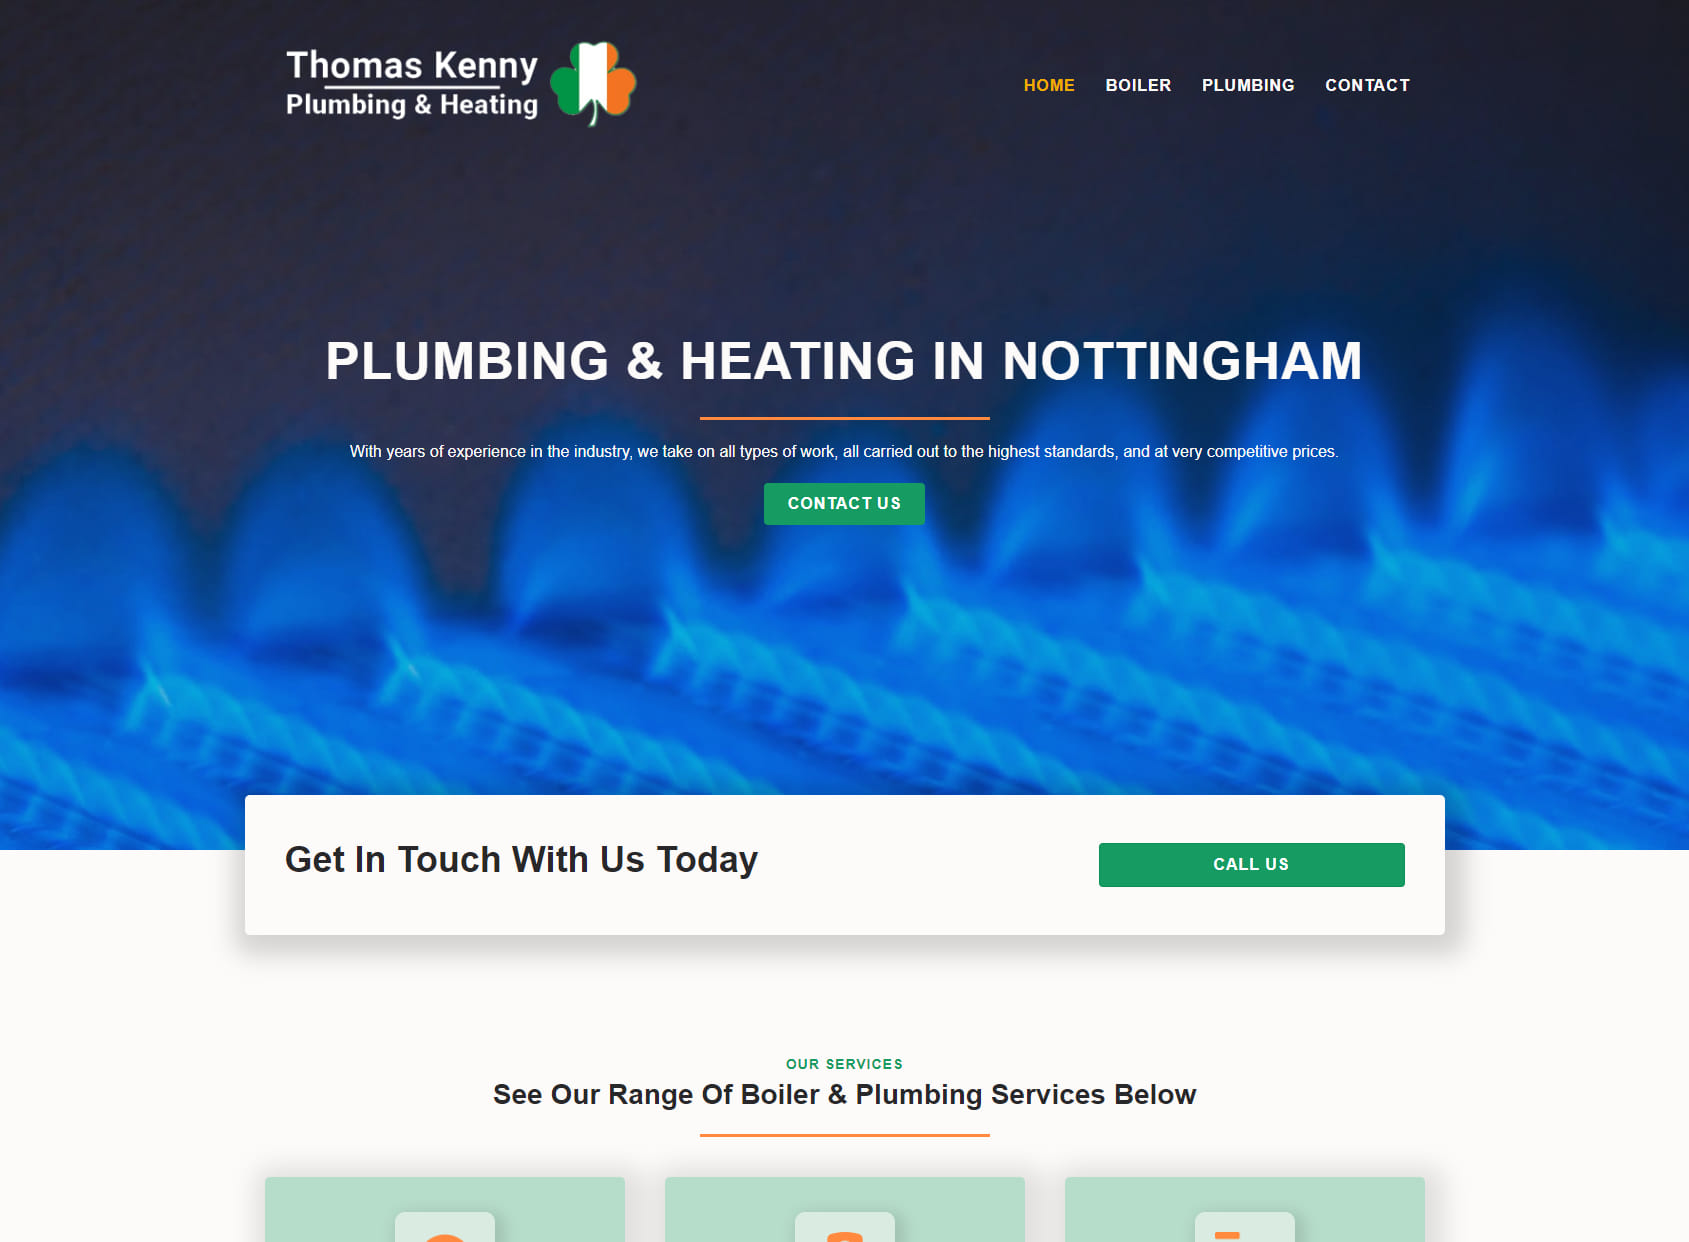 Thomas Kenny Plumbing & Heating